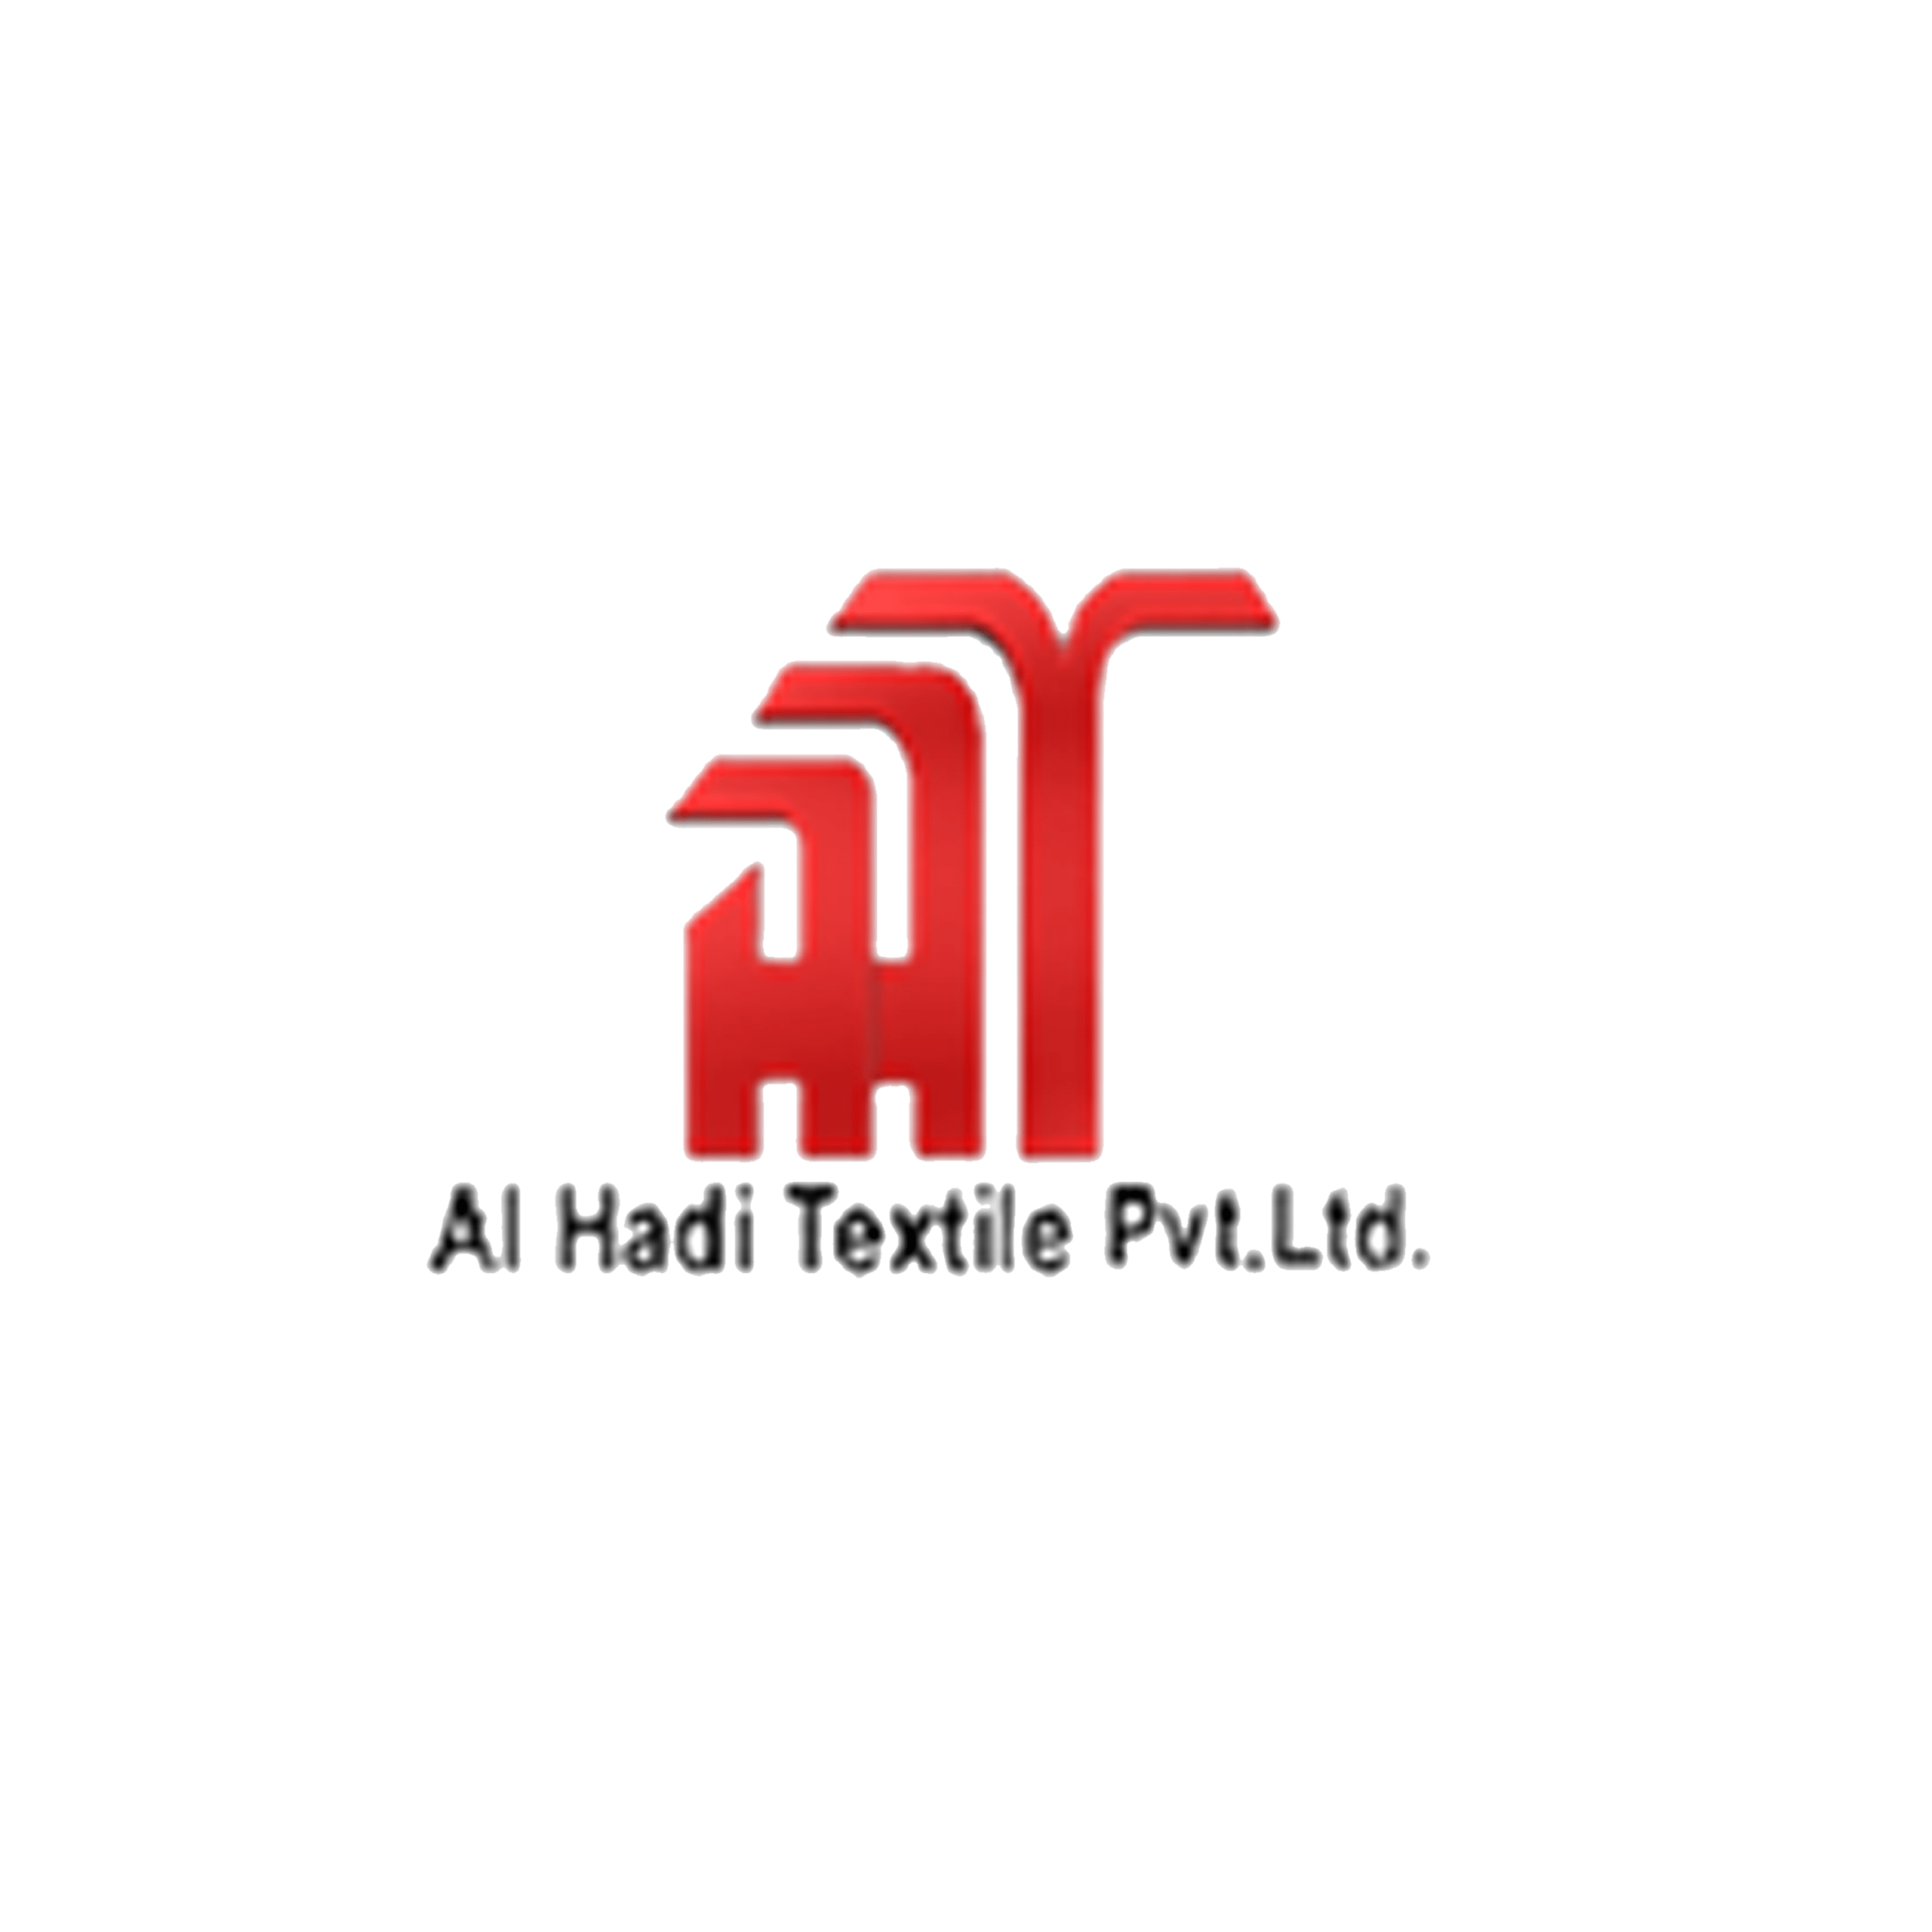 Al Hadi textile